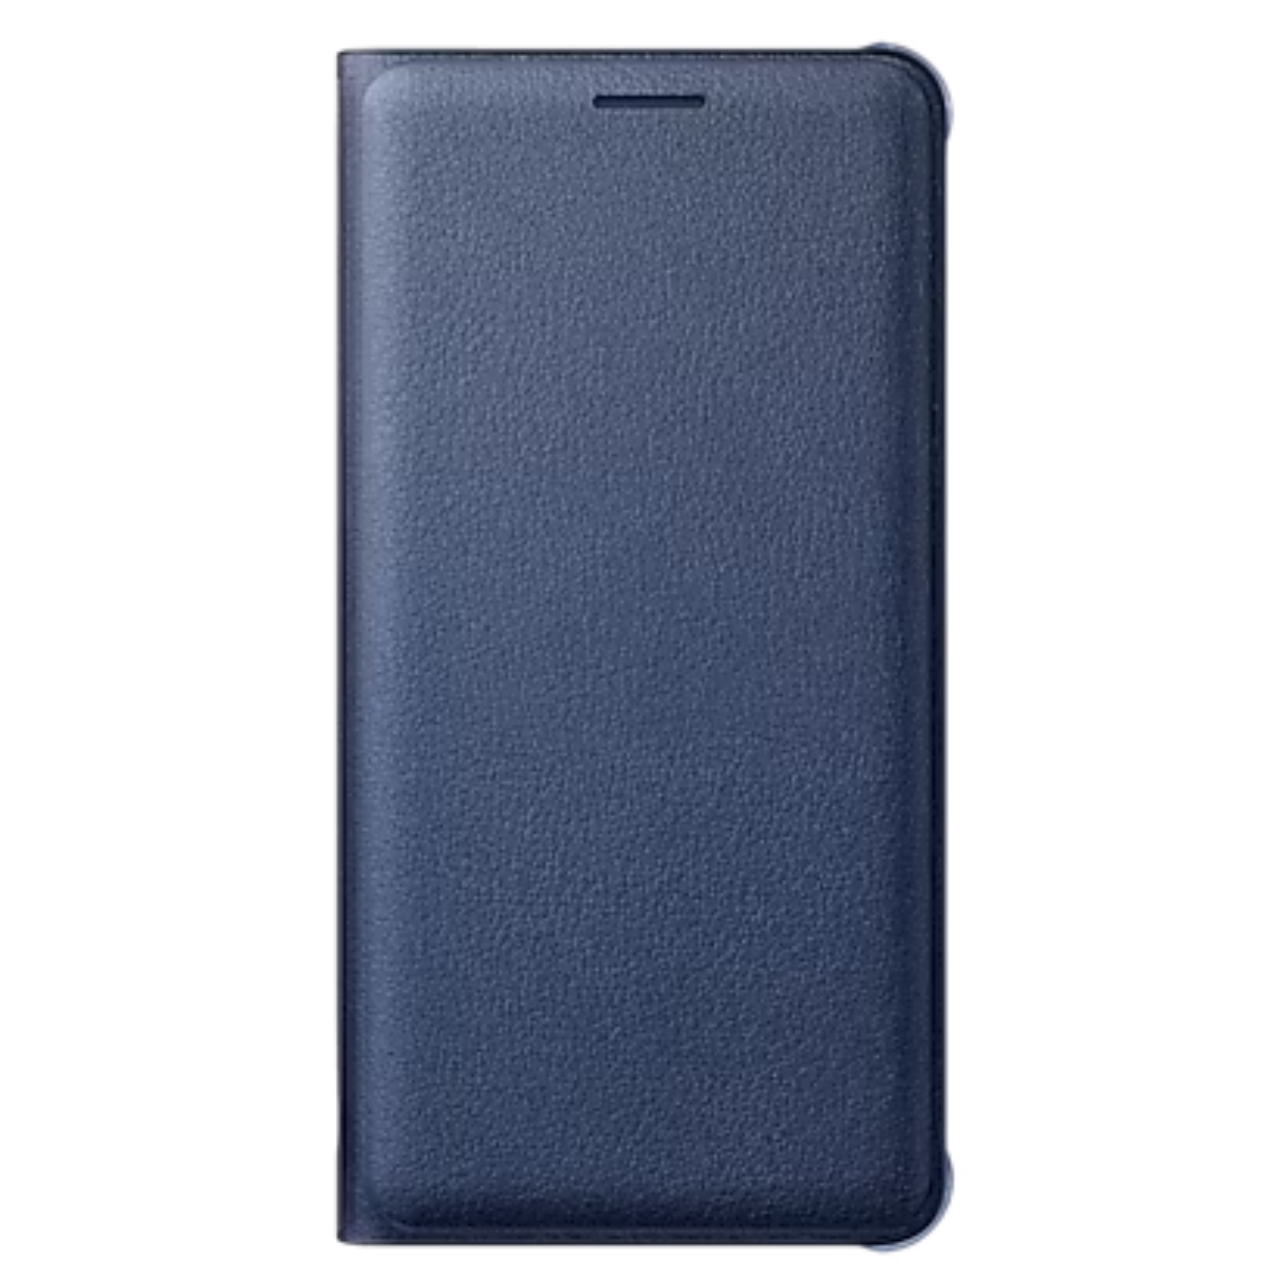 Samsung - Flip Wallet Cover für Galaxy A5 (2016) - Blau - Neu - Neuware